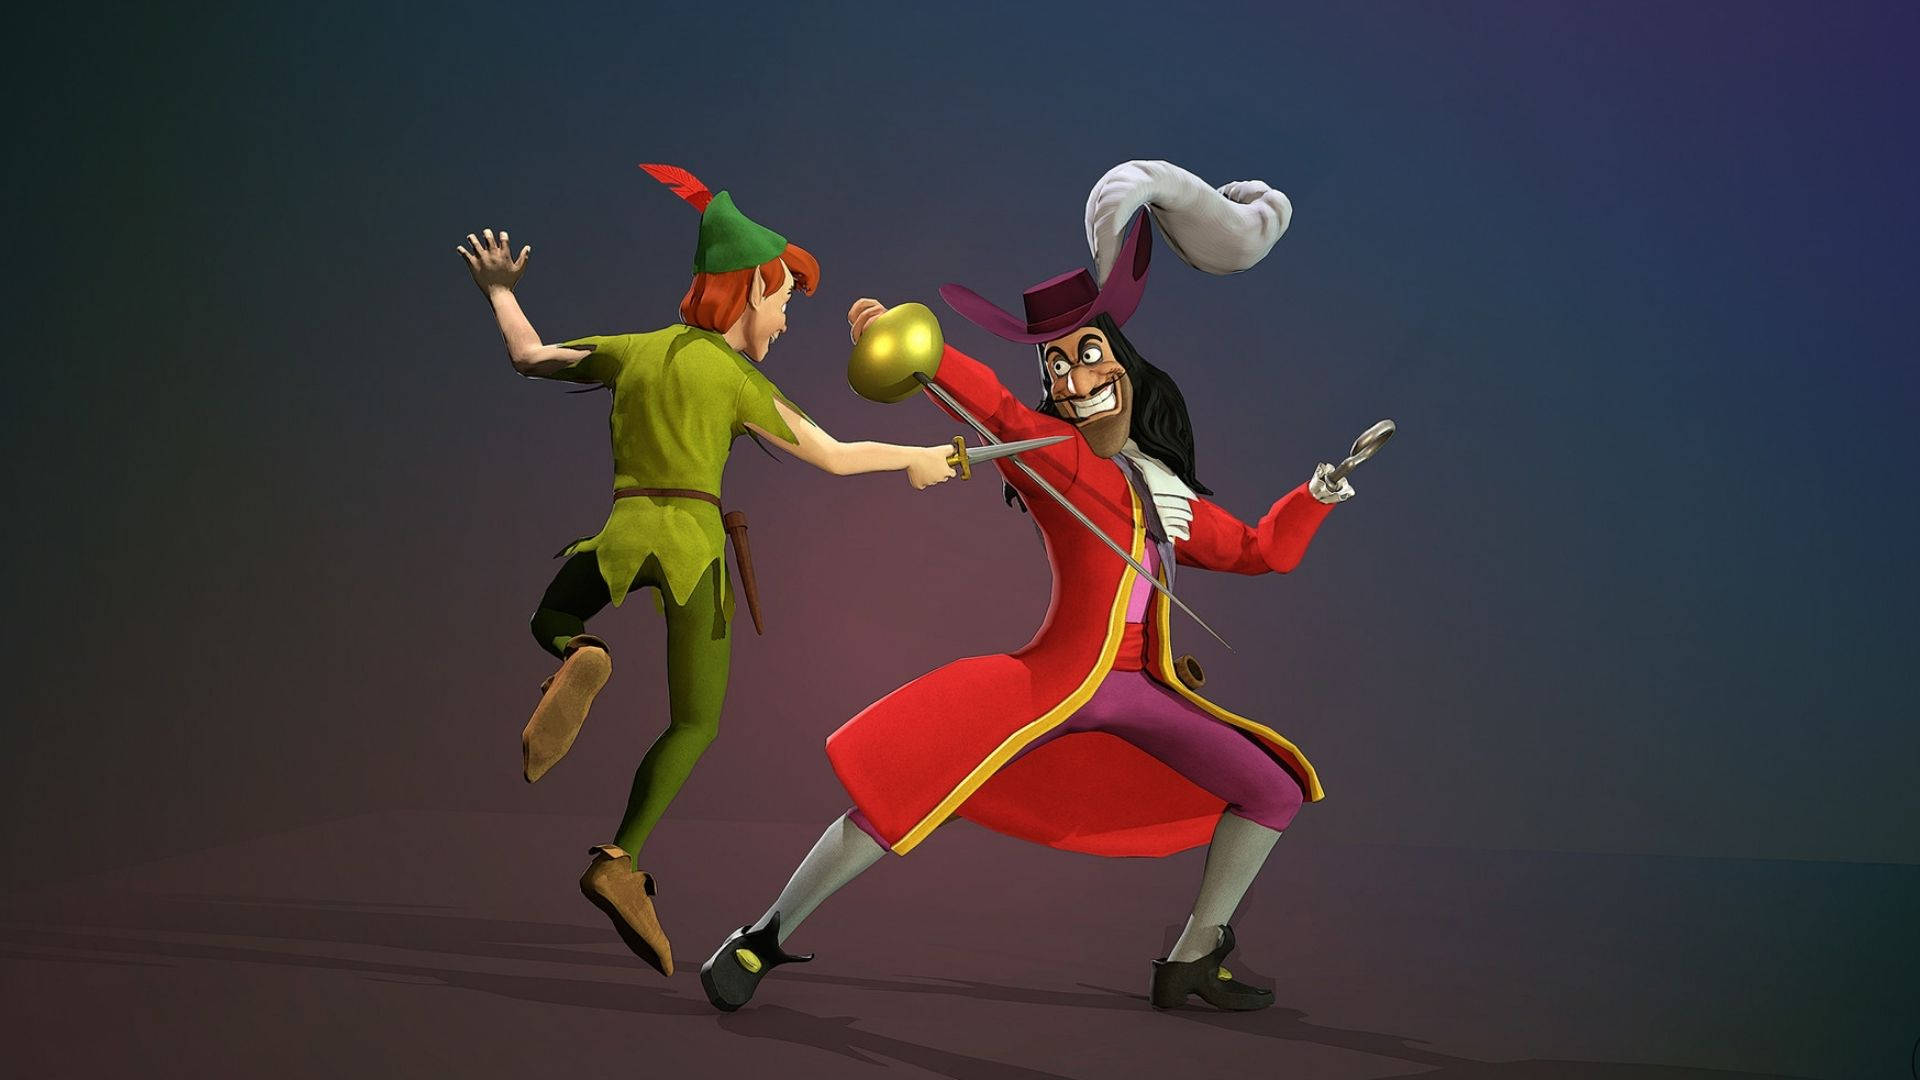 Captainhook Kämpft Gegen Peter Pan. Wallpaper